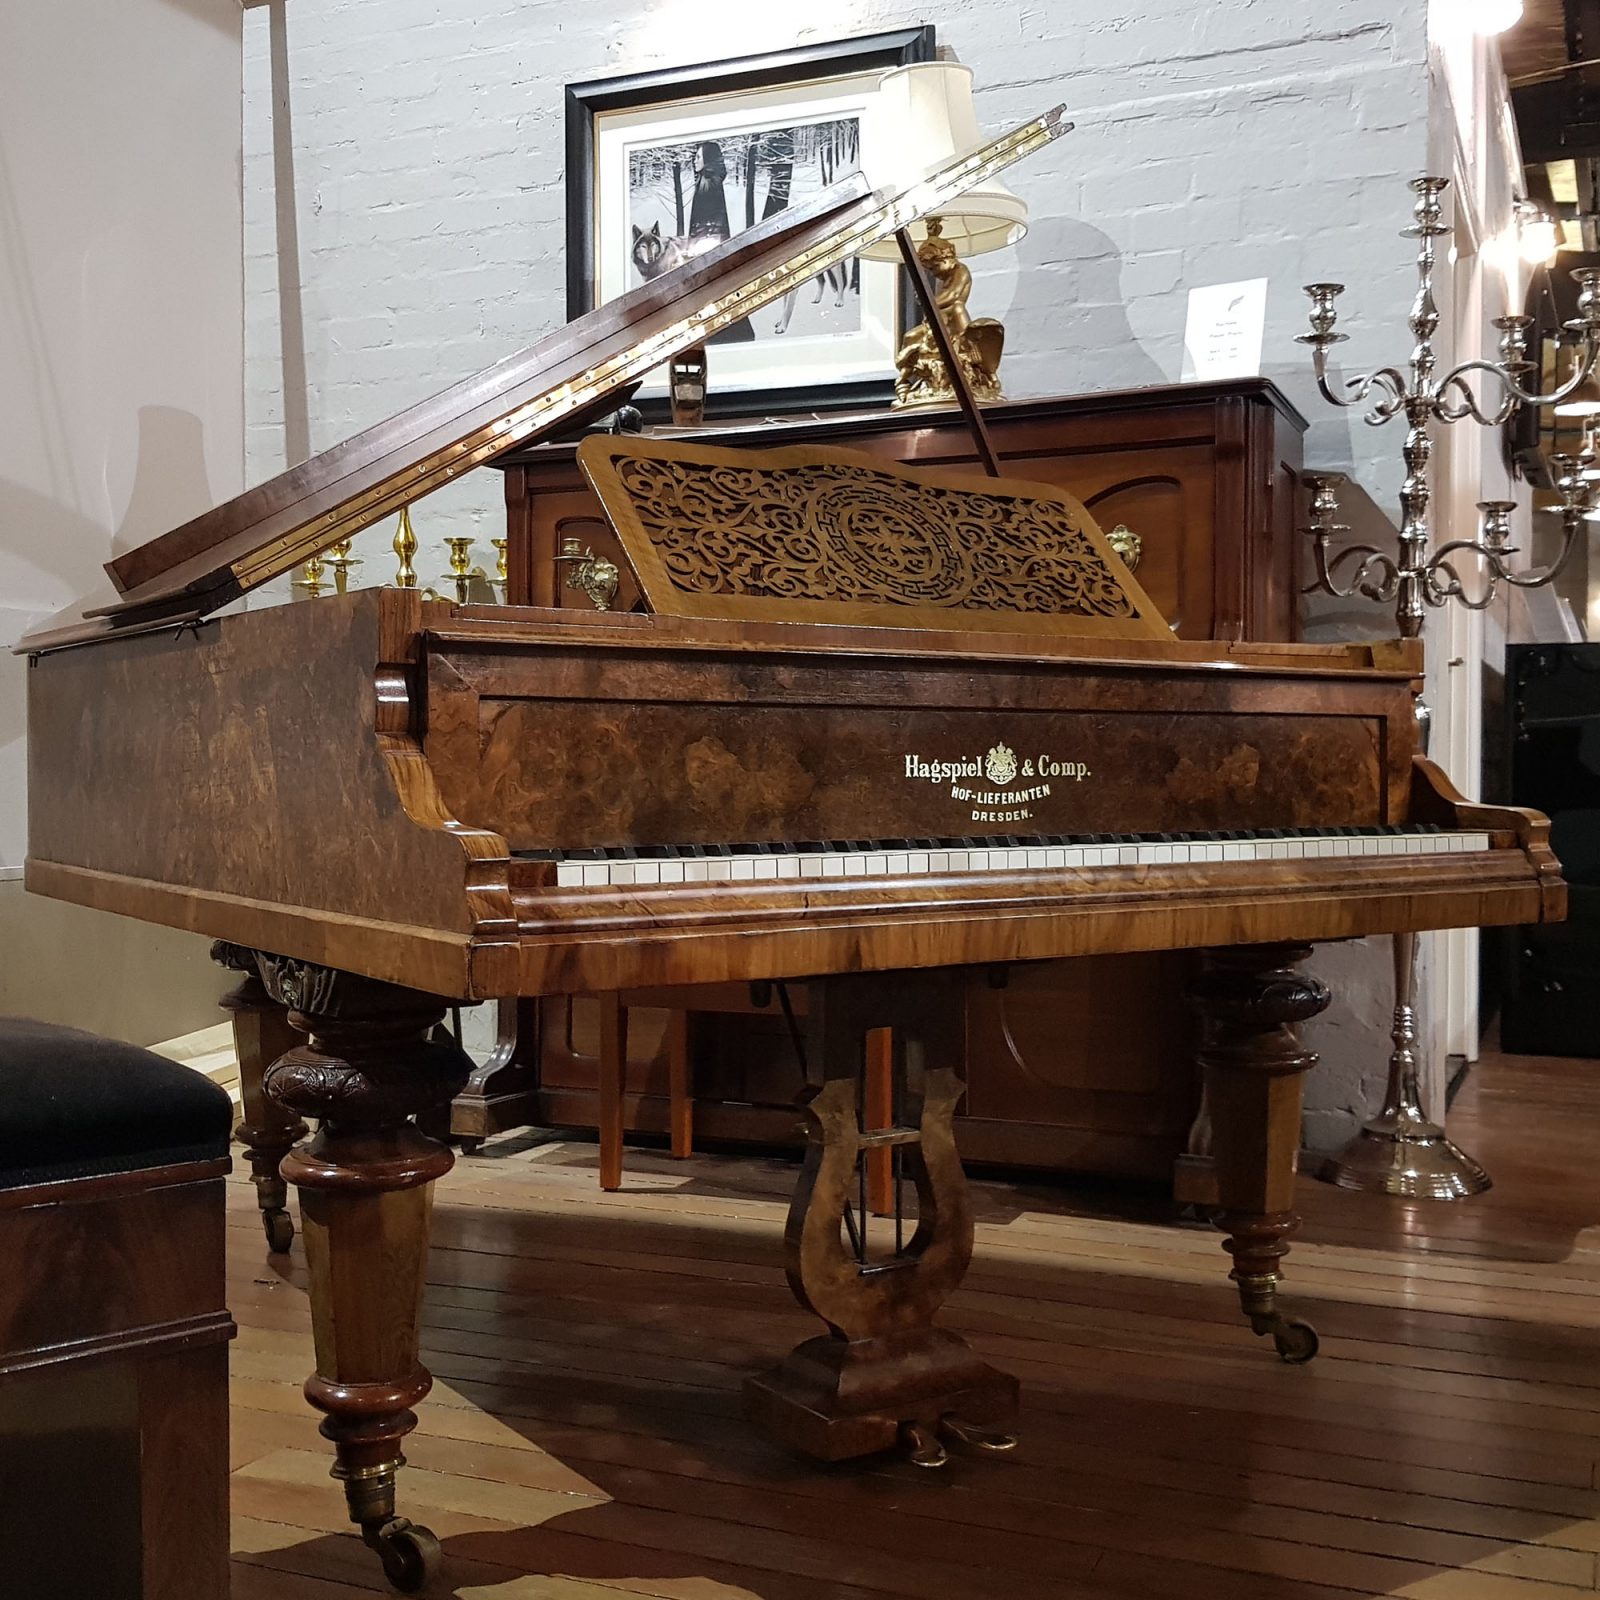 Hagspiel baby grand piano, in a burr walnut case, for sale